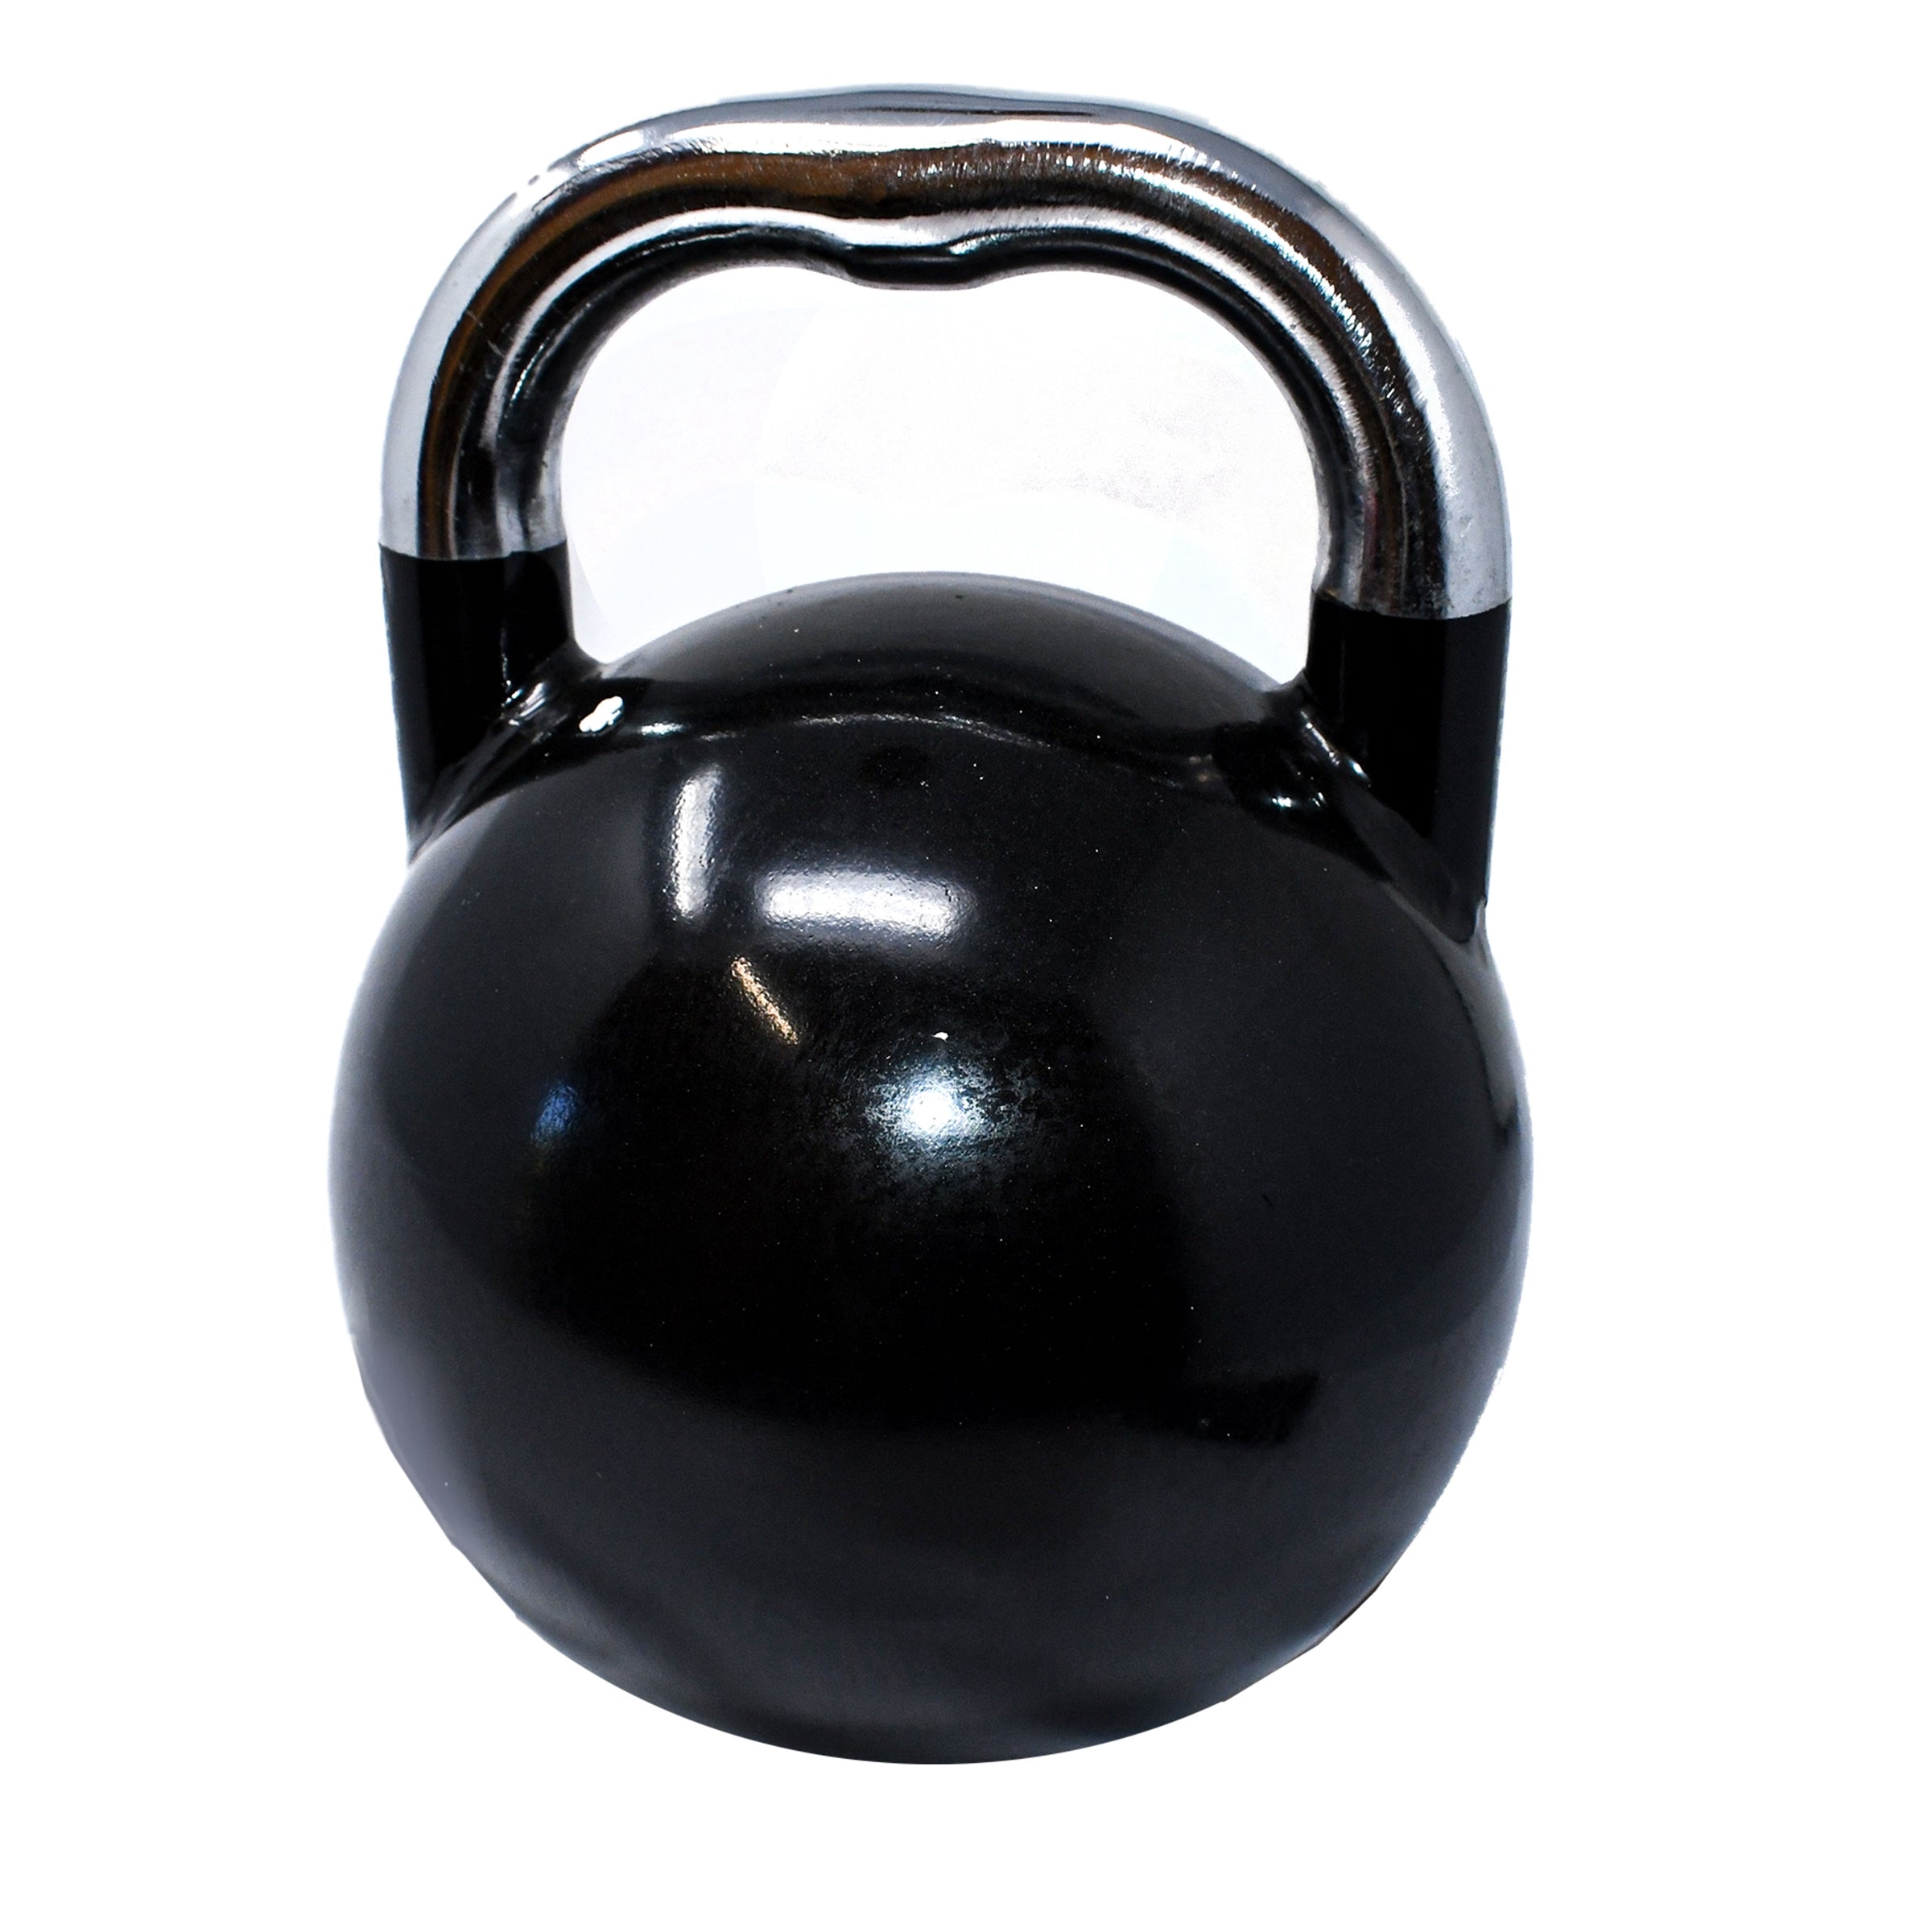 Premium Coated Steel Kettlebell - 40 lbs (18 kg) - Black